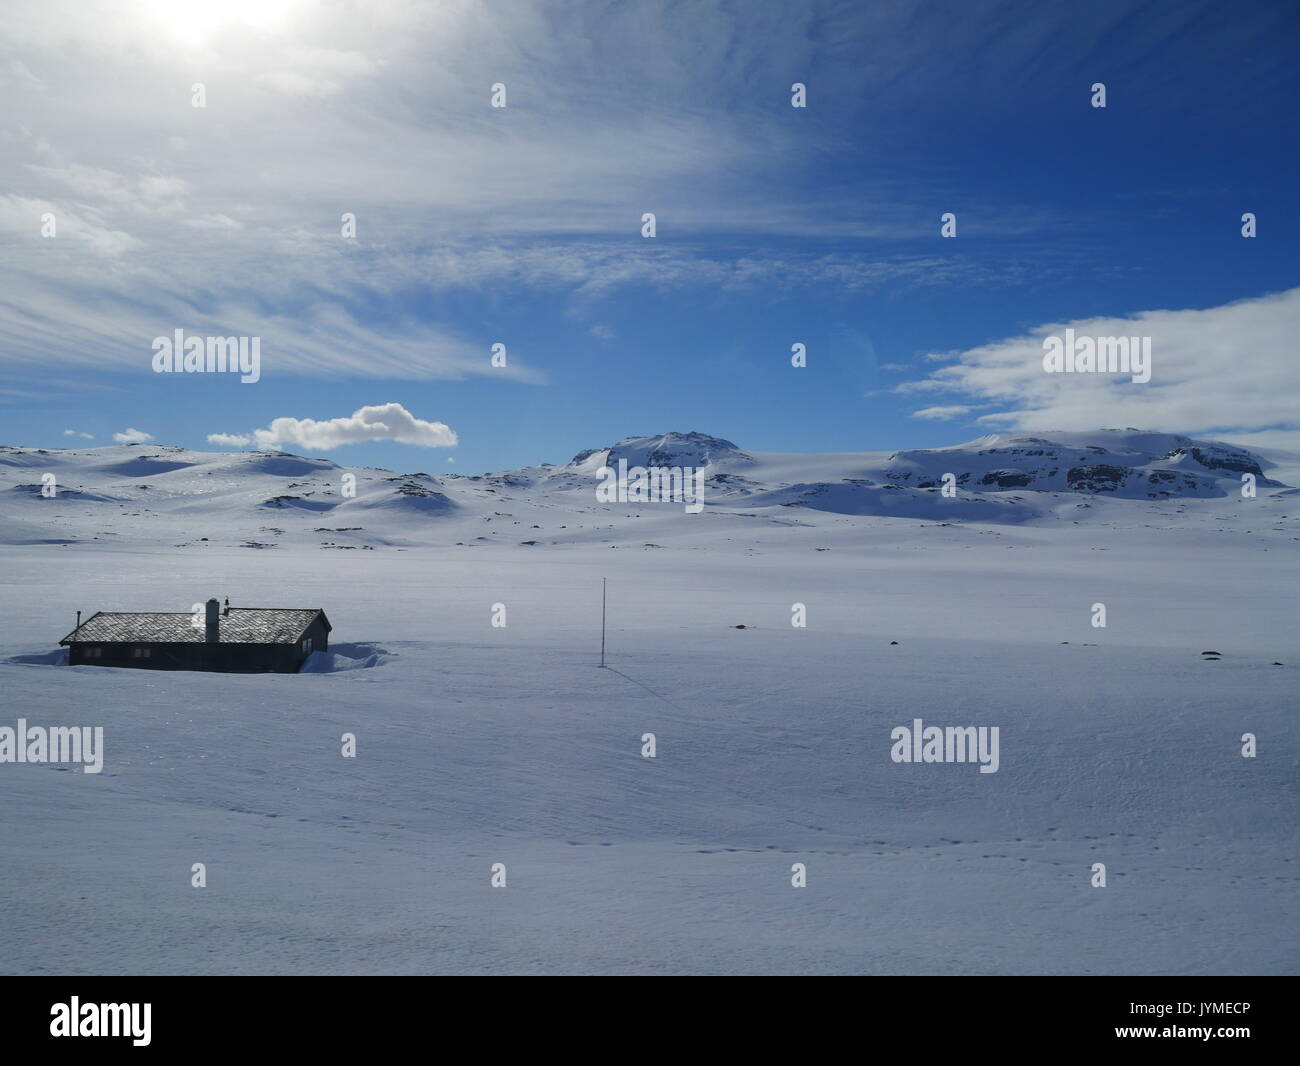 Remote nordic cabin in a snowy scene, Norway Stock Photo